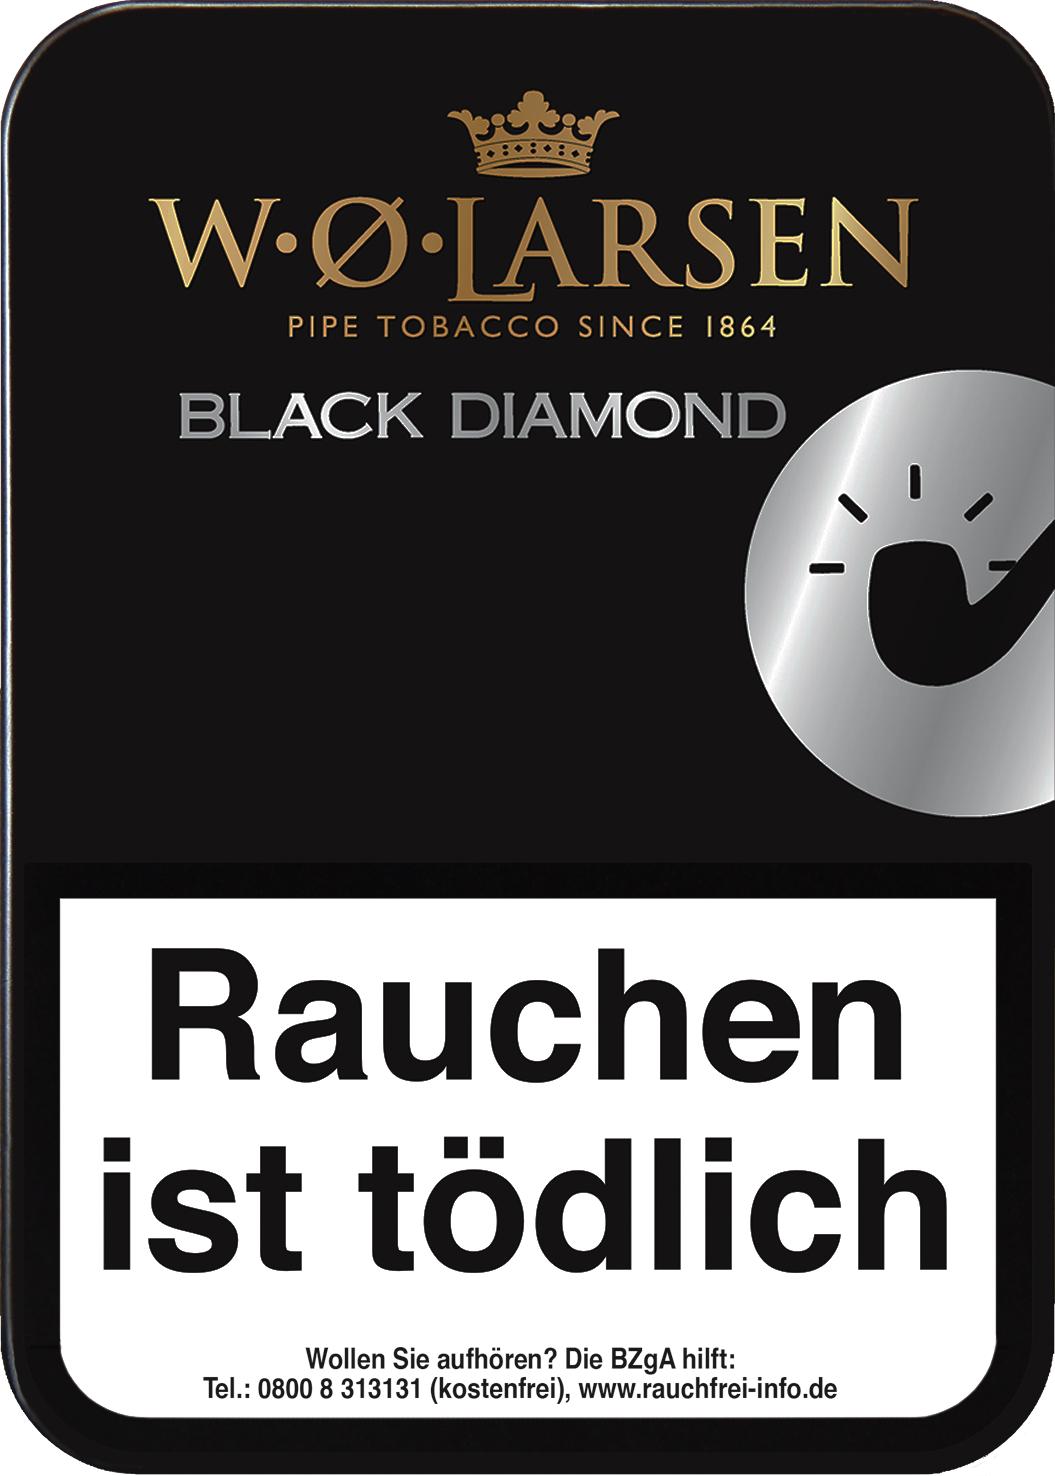 W.O. Larsen Black  Diamond 1 x 100g Pfeifentabak 1 x 100g Krüll